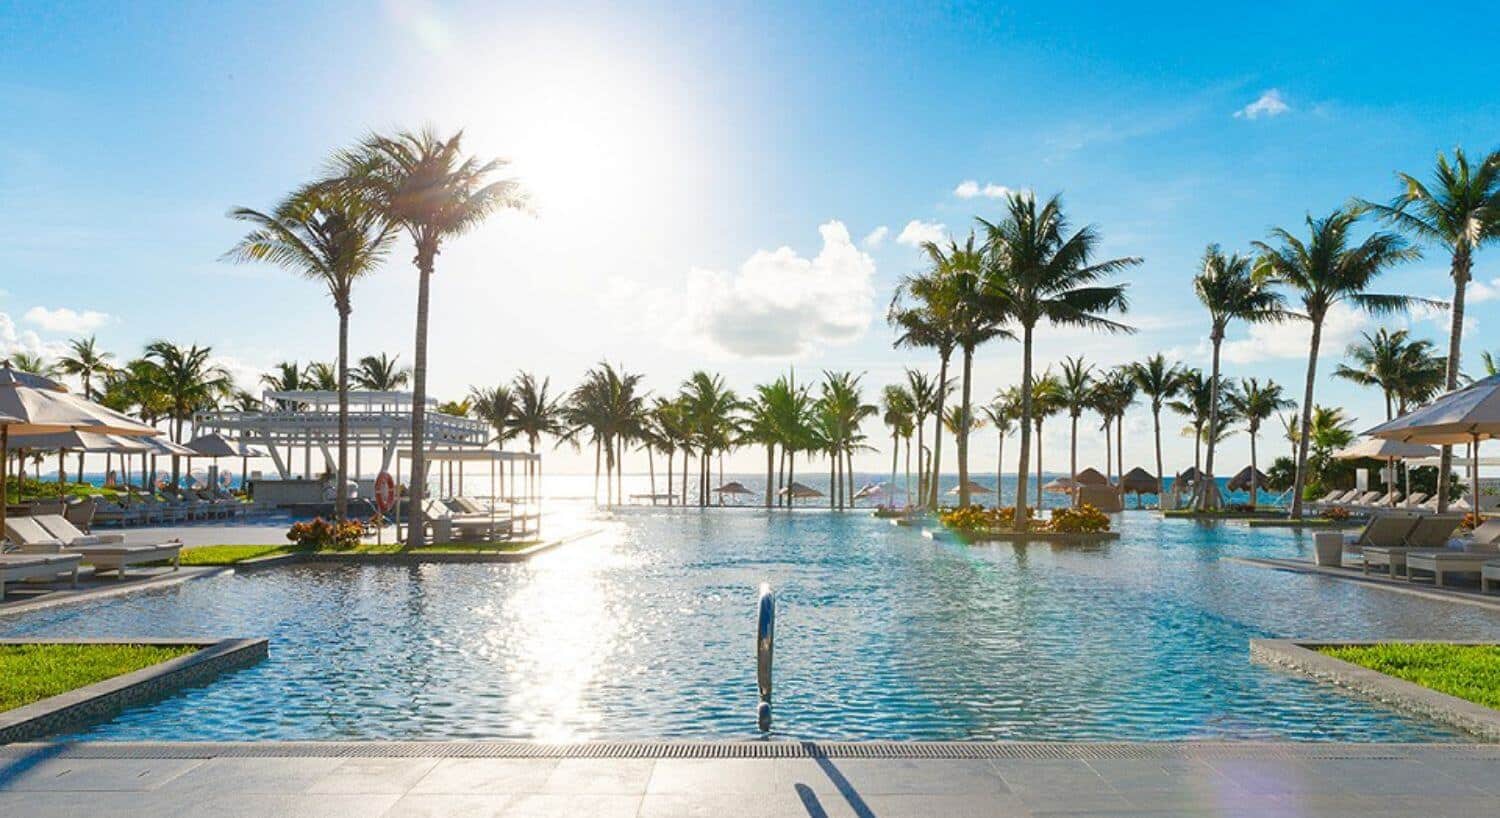 GB-Cancun-Resort-2-1500x818